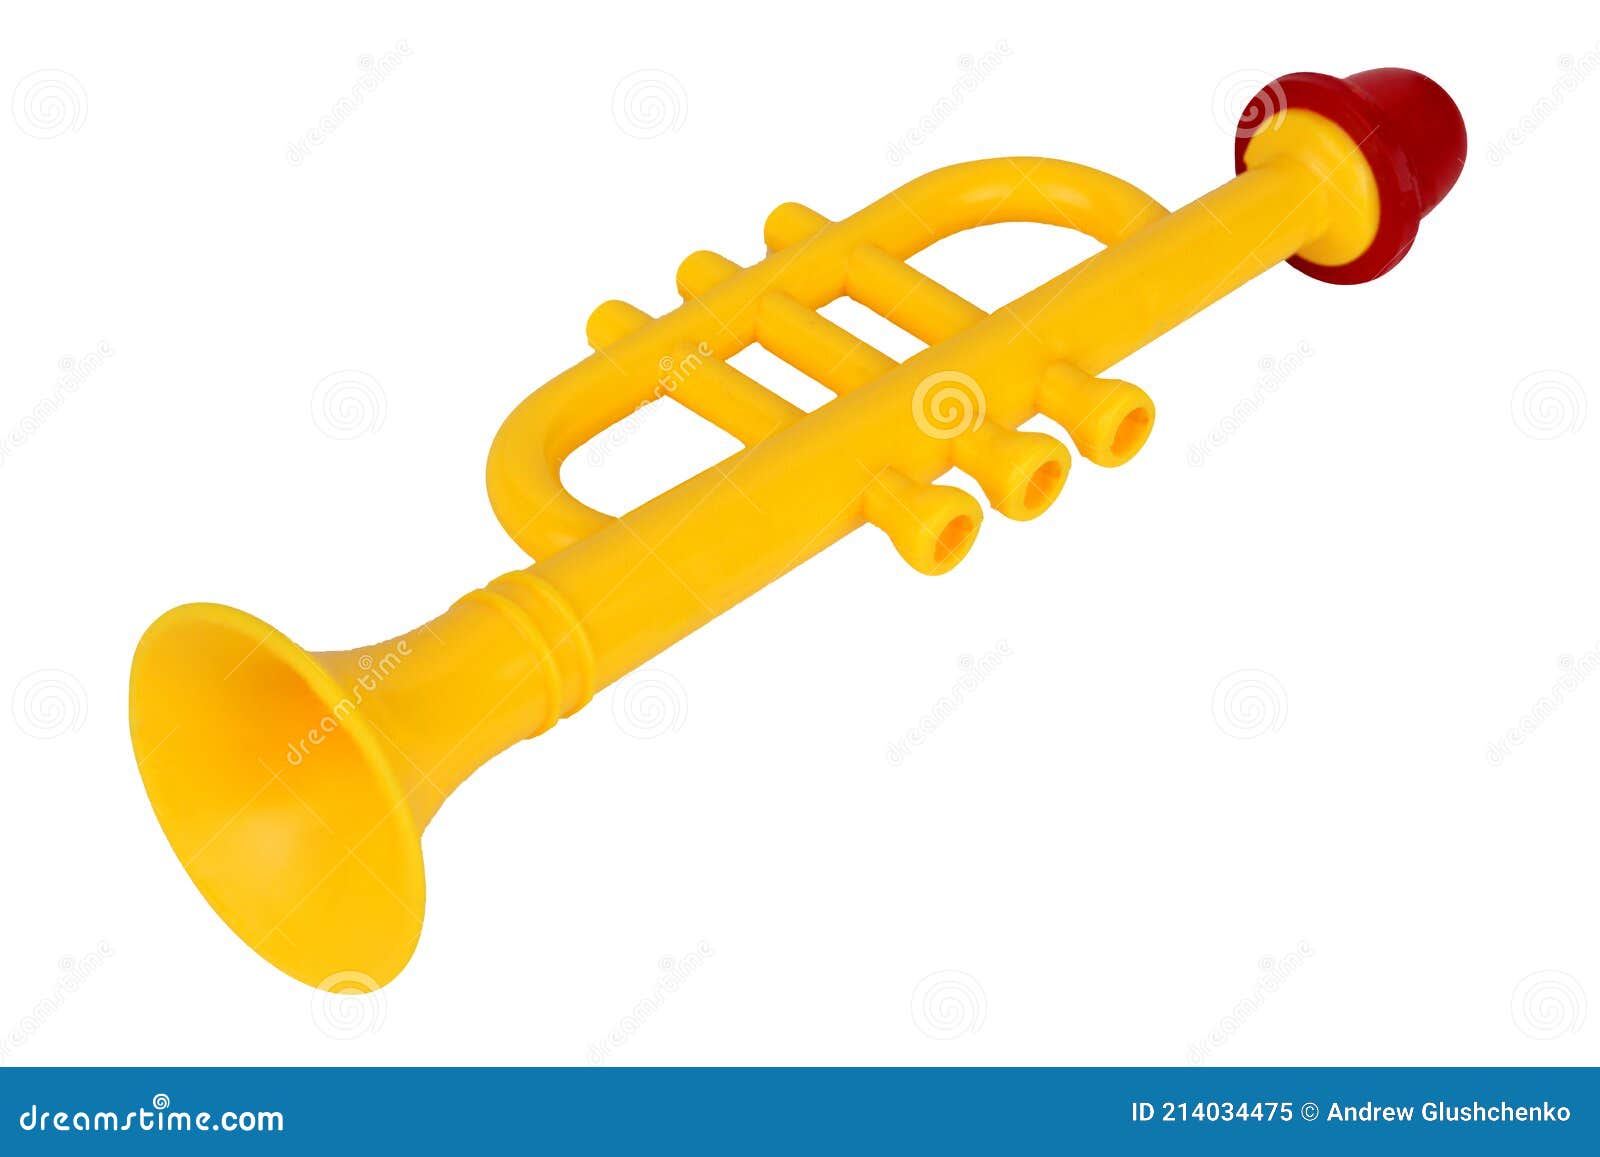 https://thumbs.dreamstime.com/z/trompeta-musical-de-juguete-amarillo-sobre-un-fondo-blanco-aislado-214034475.jpg